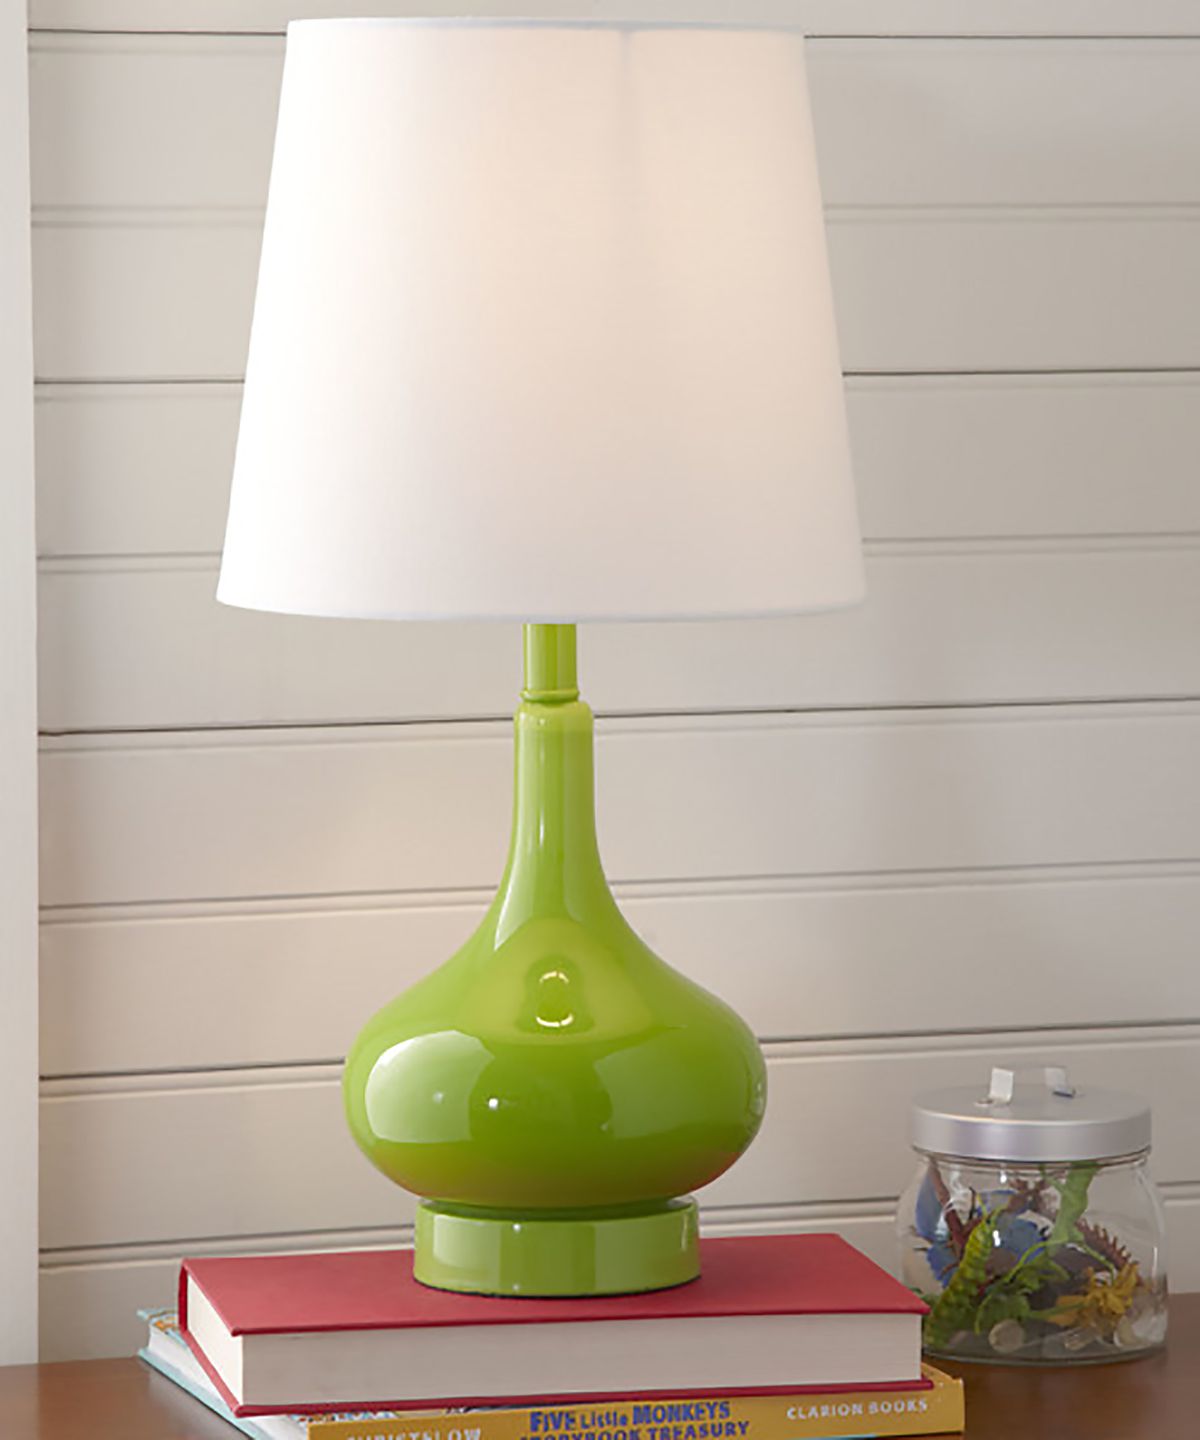 BIRCH LANE Gourd-geous Table Lamp